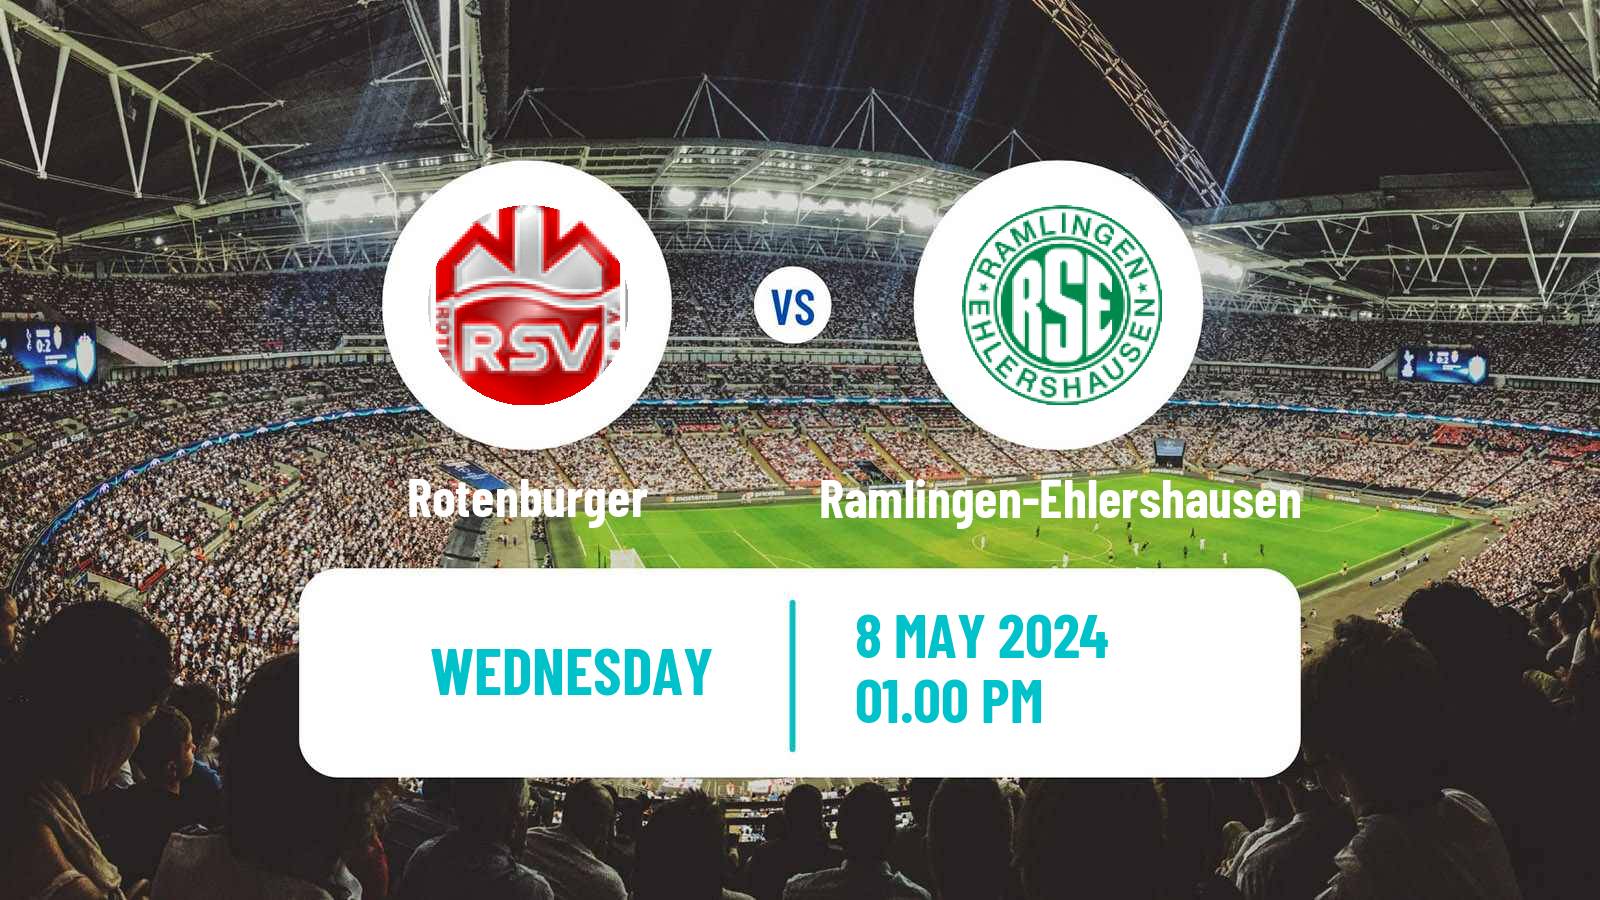 Soccer German Oberliga Niedersachsen Rotenburger - Ramlingen-Ehlershausen